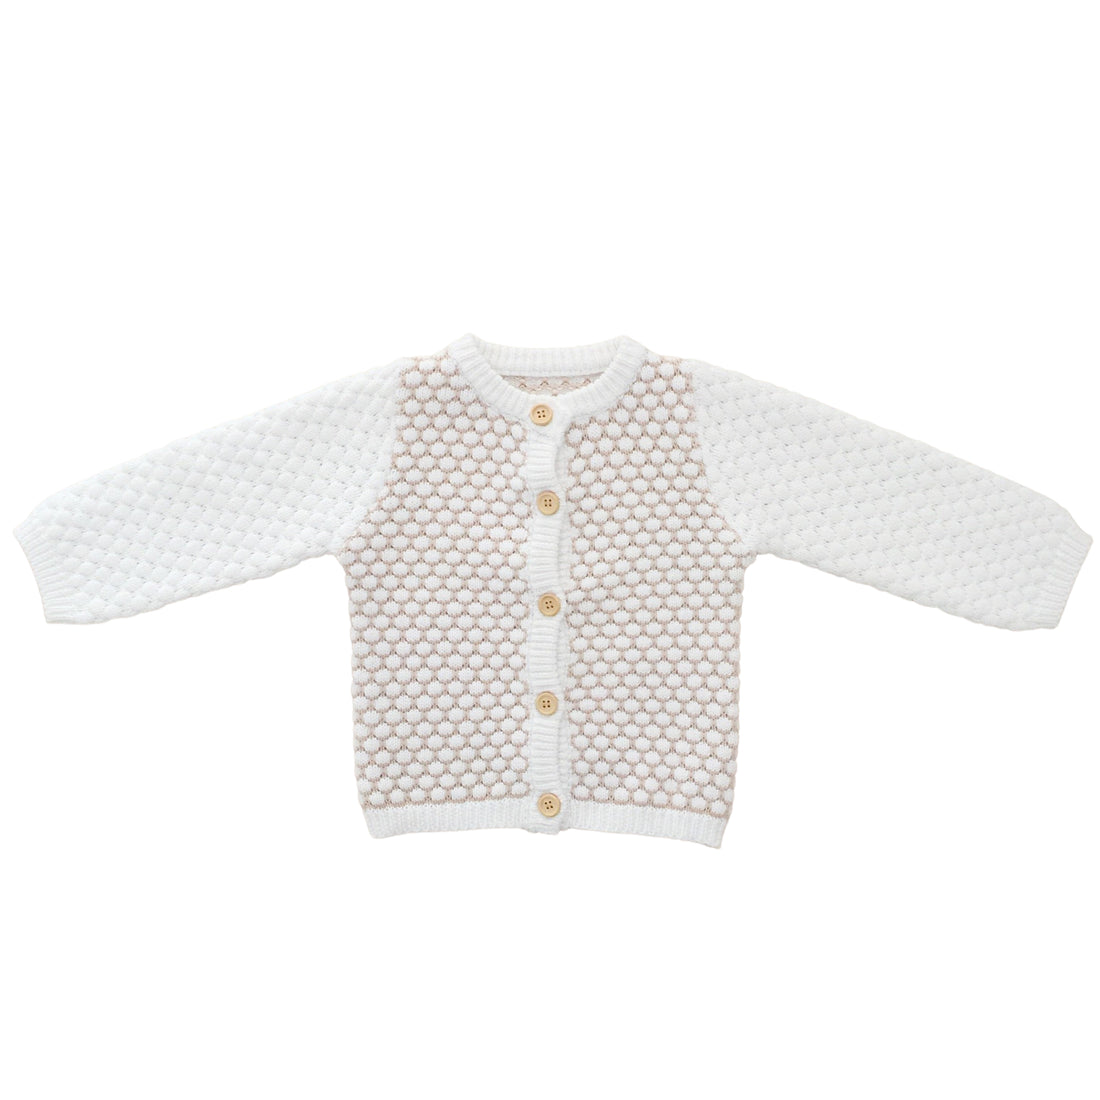 Honeycomb Knitted Cardigan - MILK/LATTE